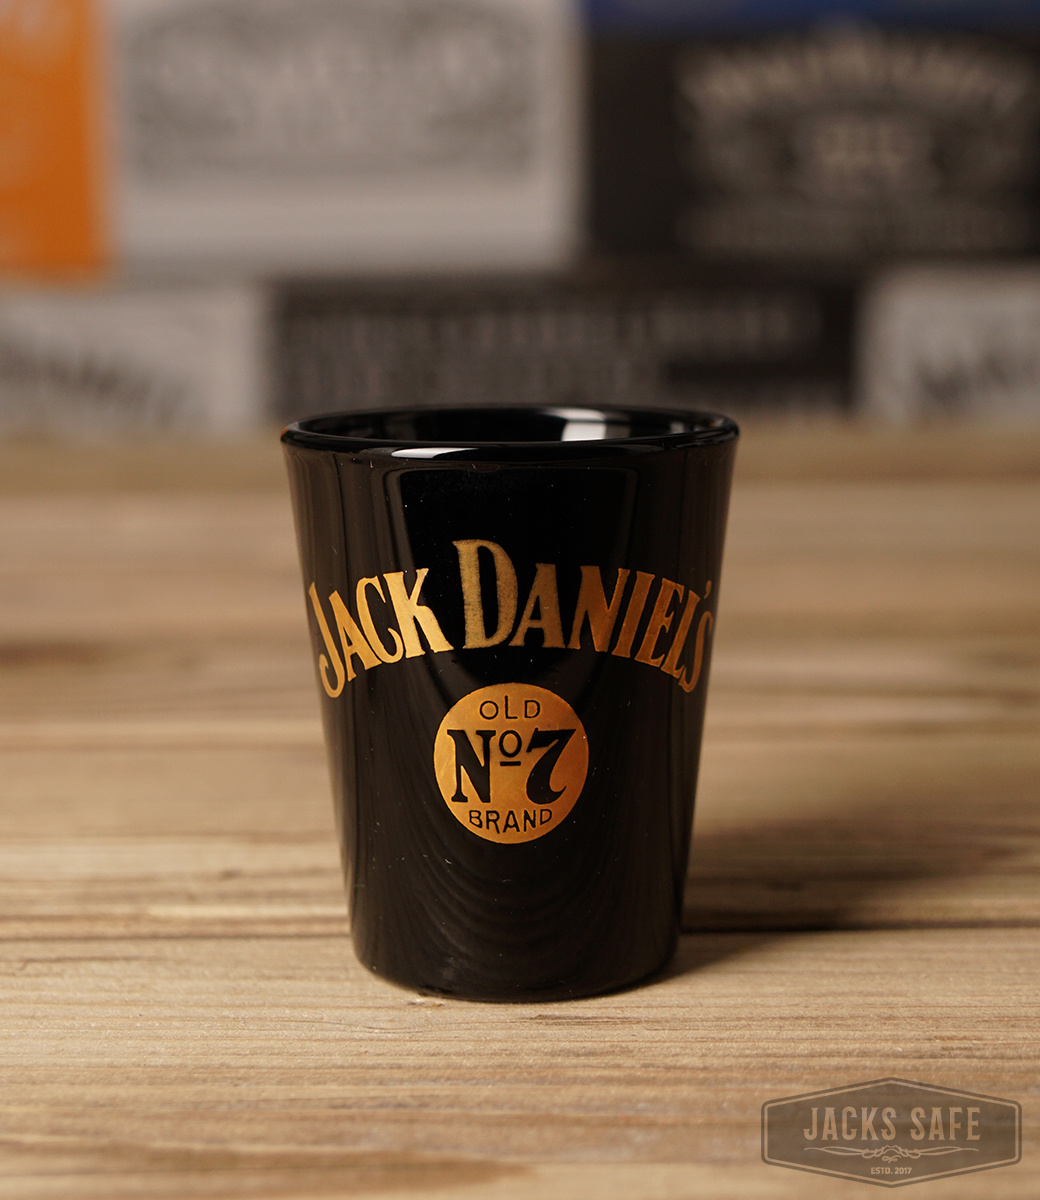 JACK DANIEL'S - Shot glass - Black Ceramic with gold print - Old nr 7 Round logo - 90's